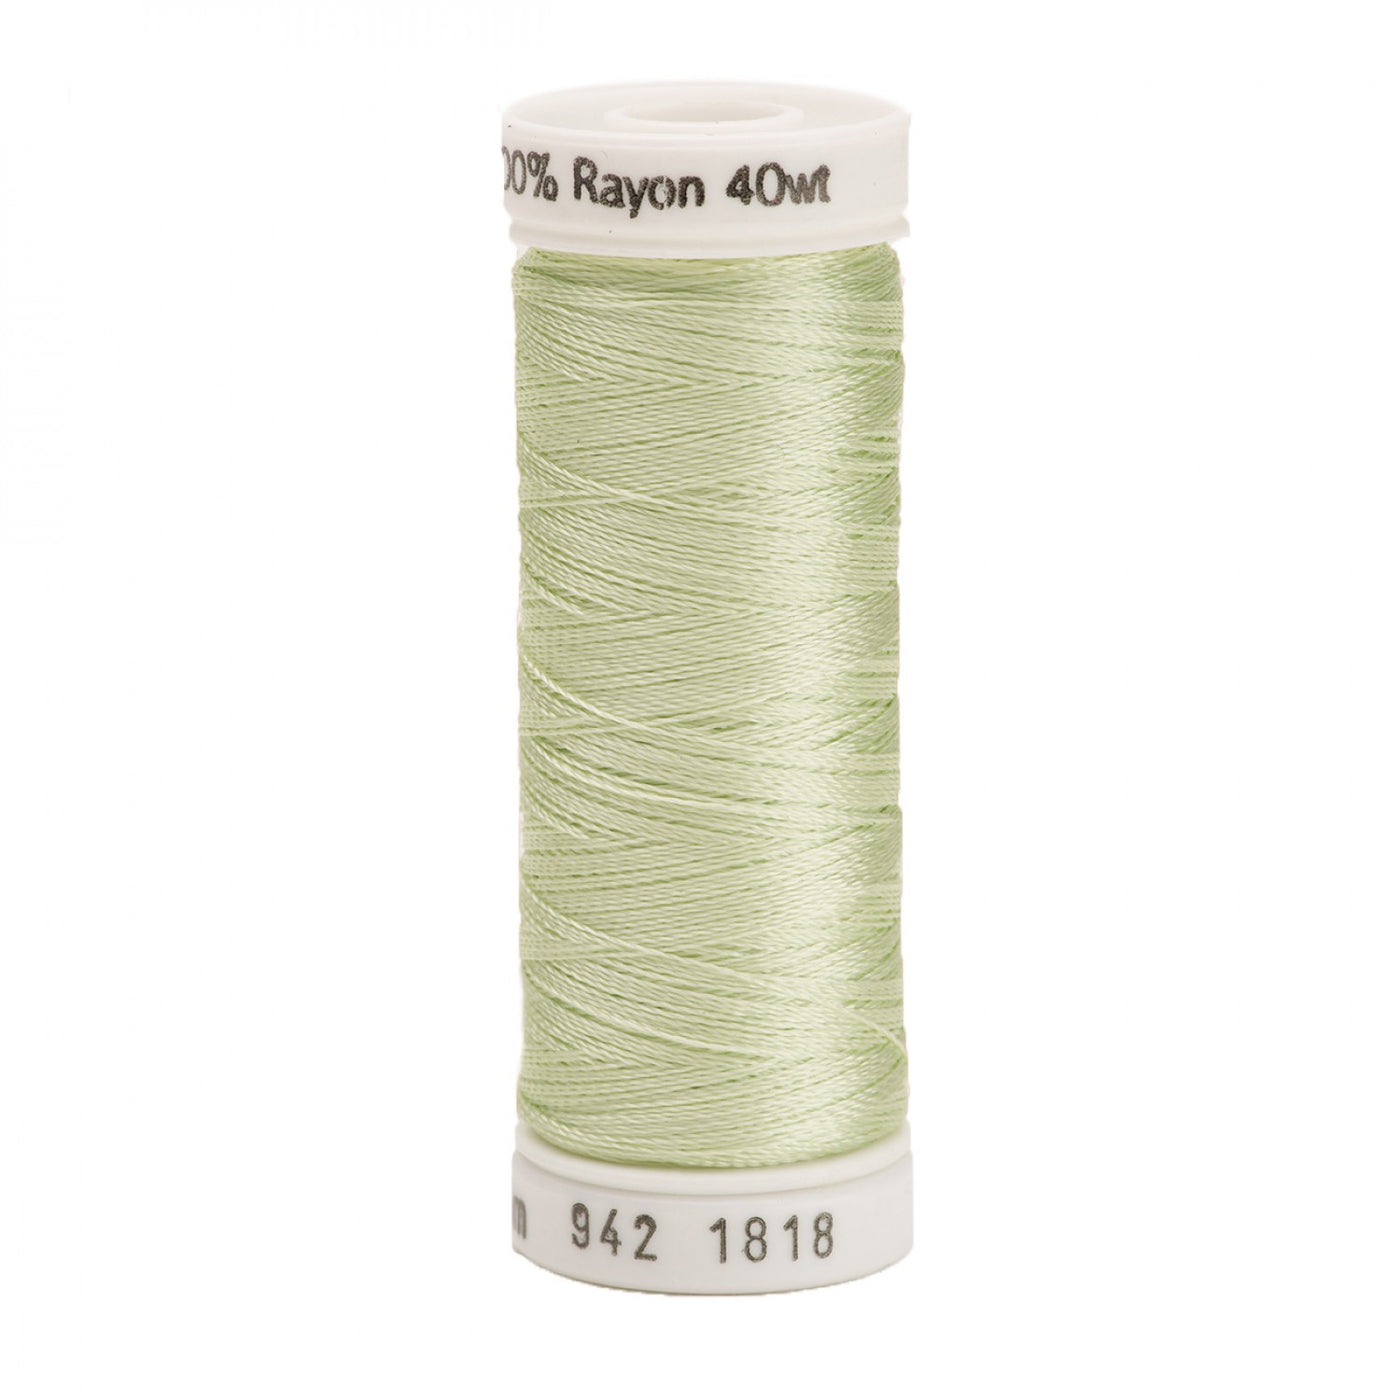 225m 40wt Rayon Embroidery Thread 1818 Fairway Mist (4202155900973)